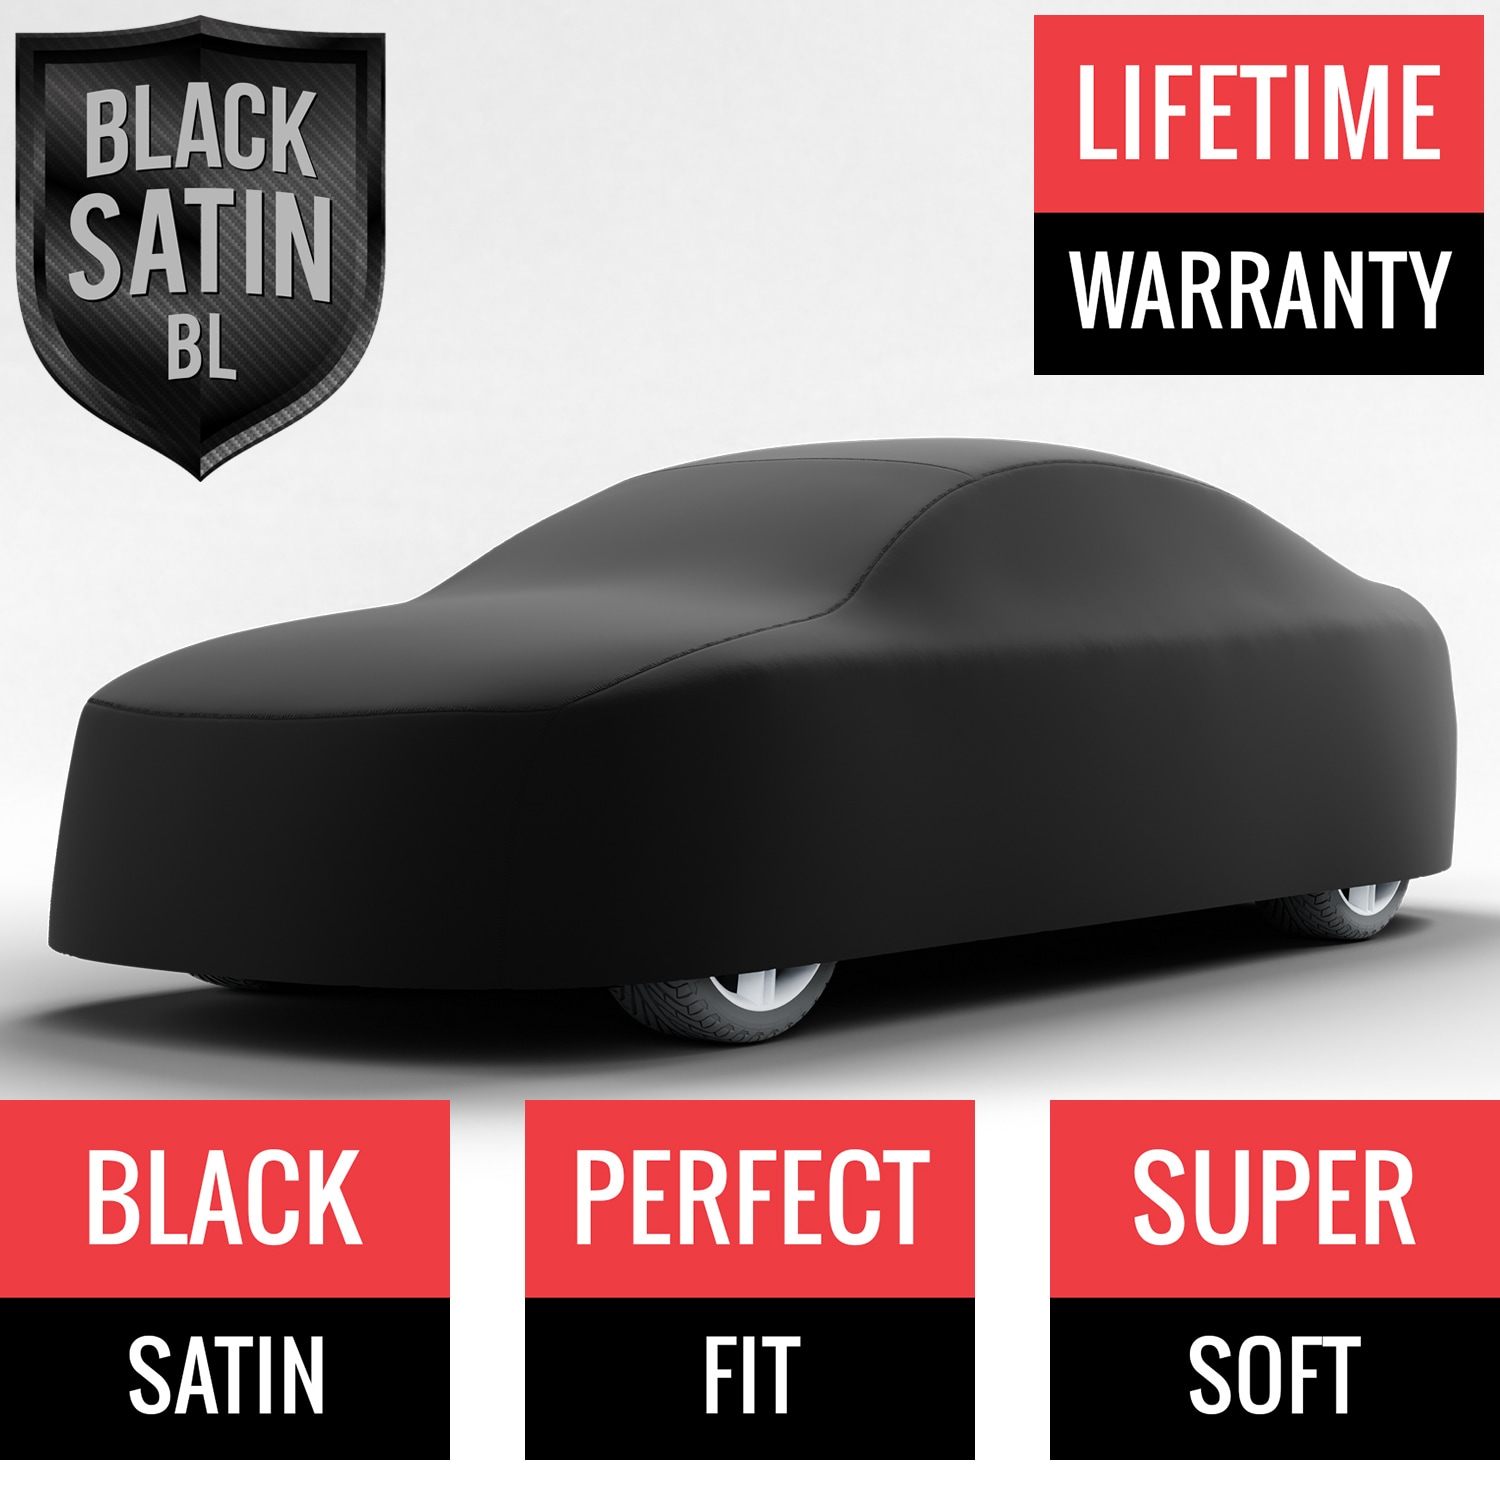 Black Satin BL - Black Car Cover for Mercedes-Benz CLK320 2002 Coupe 2-Door